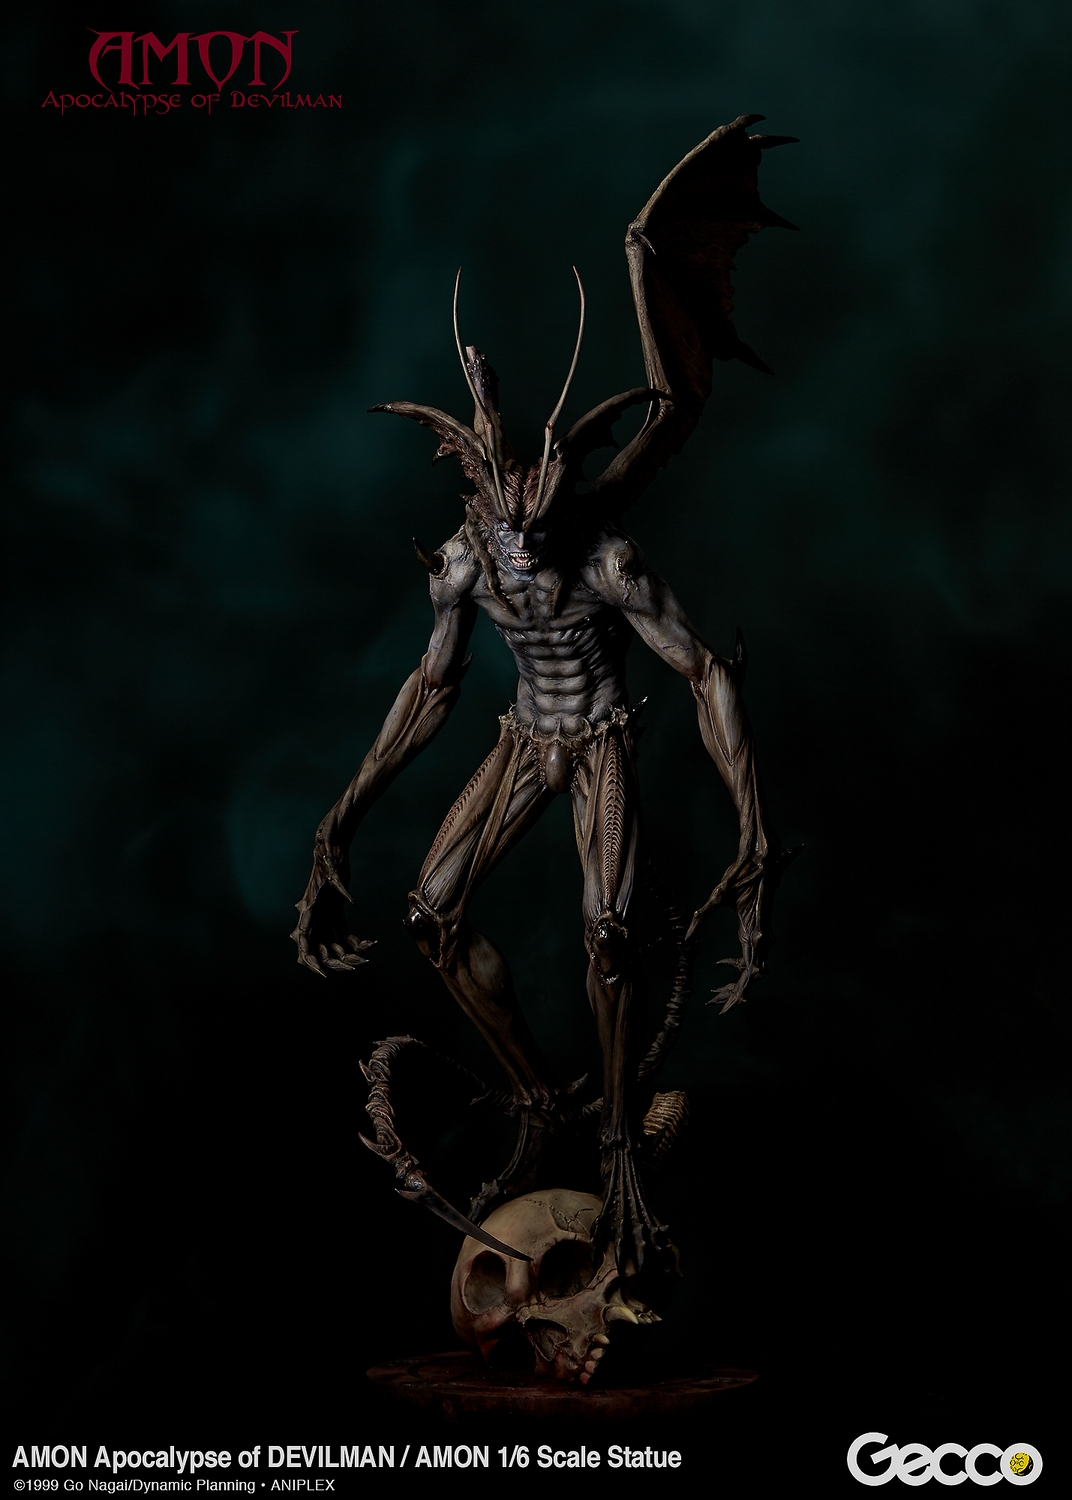 Gecco-Amon-Apocalypse-of-Devilman-Statue-001.jpg